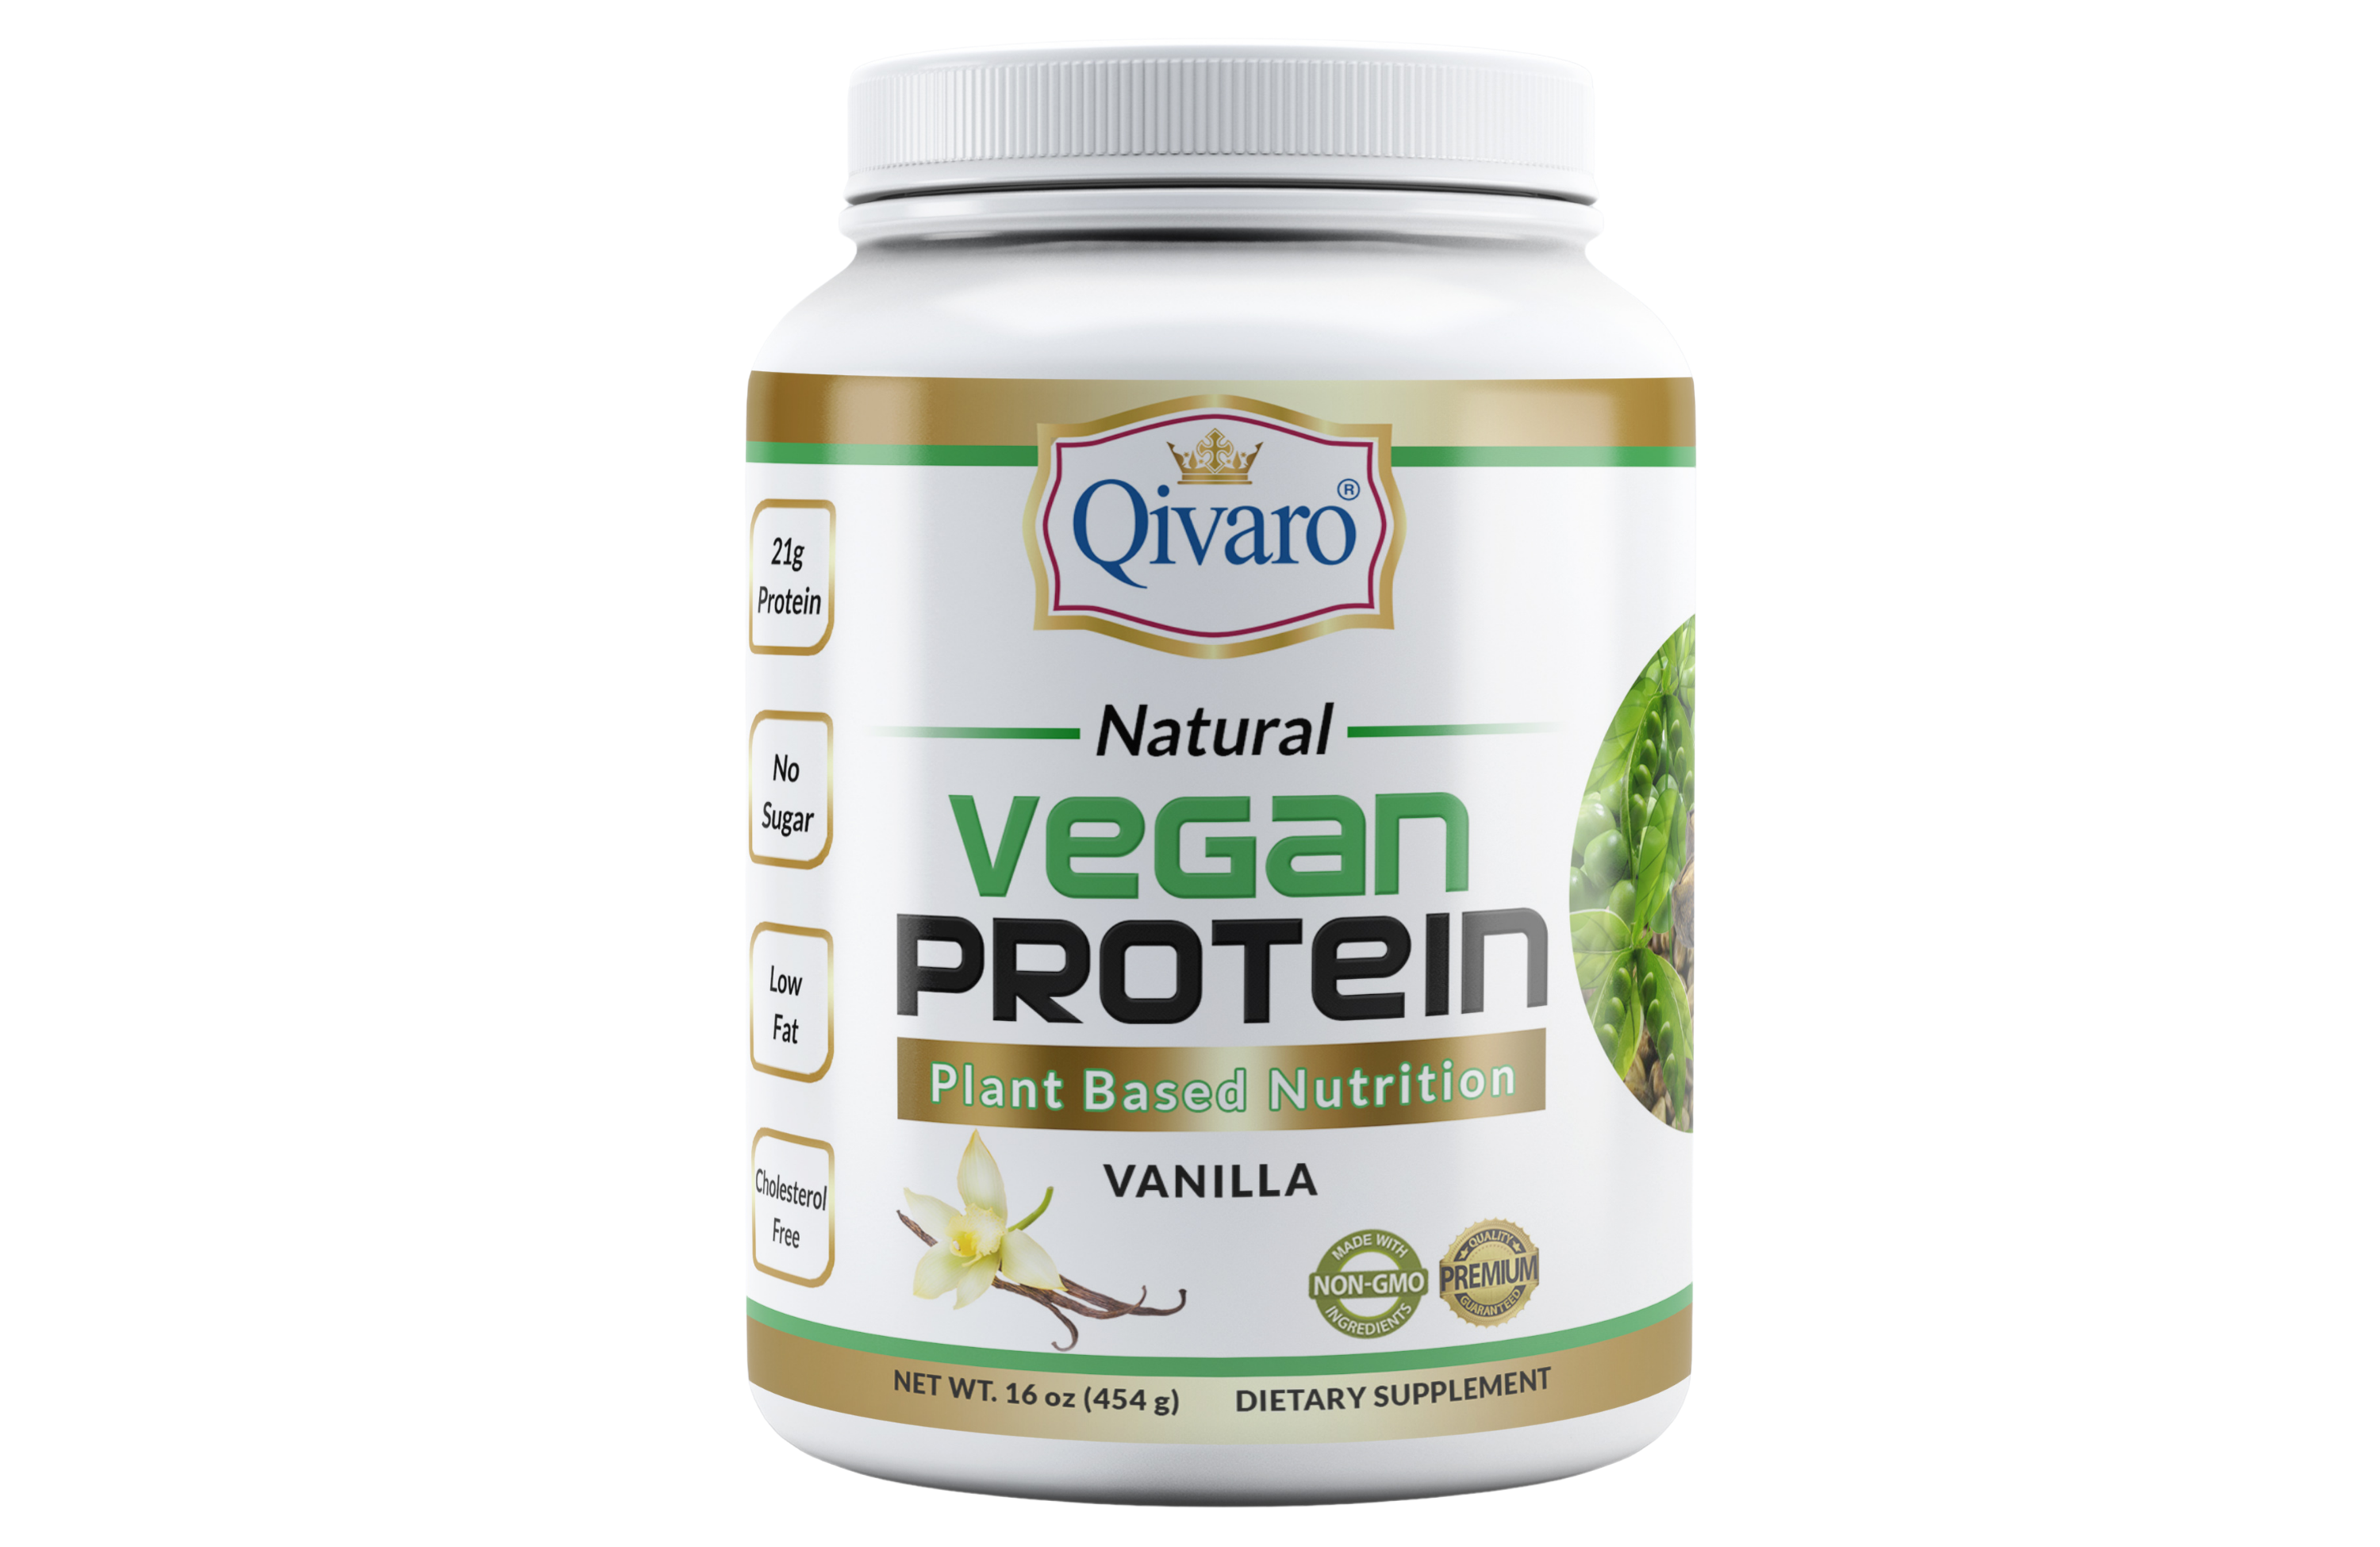 QVP01: Vanilla Vegan Protein (454 grams)